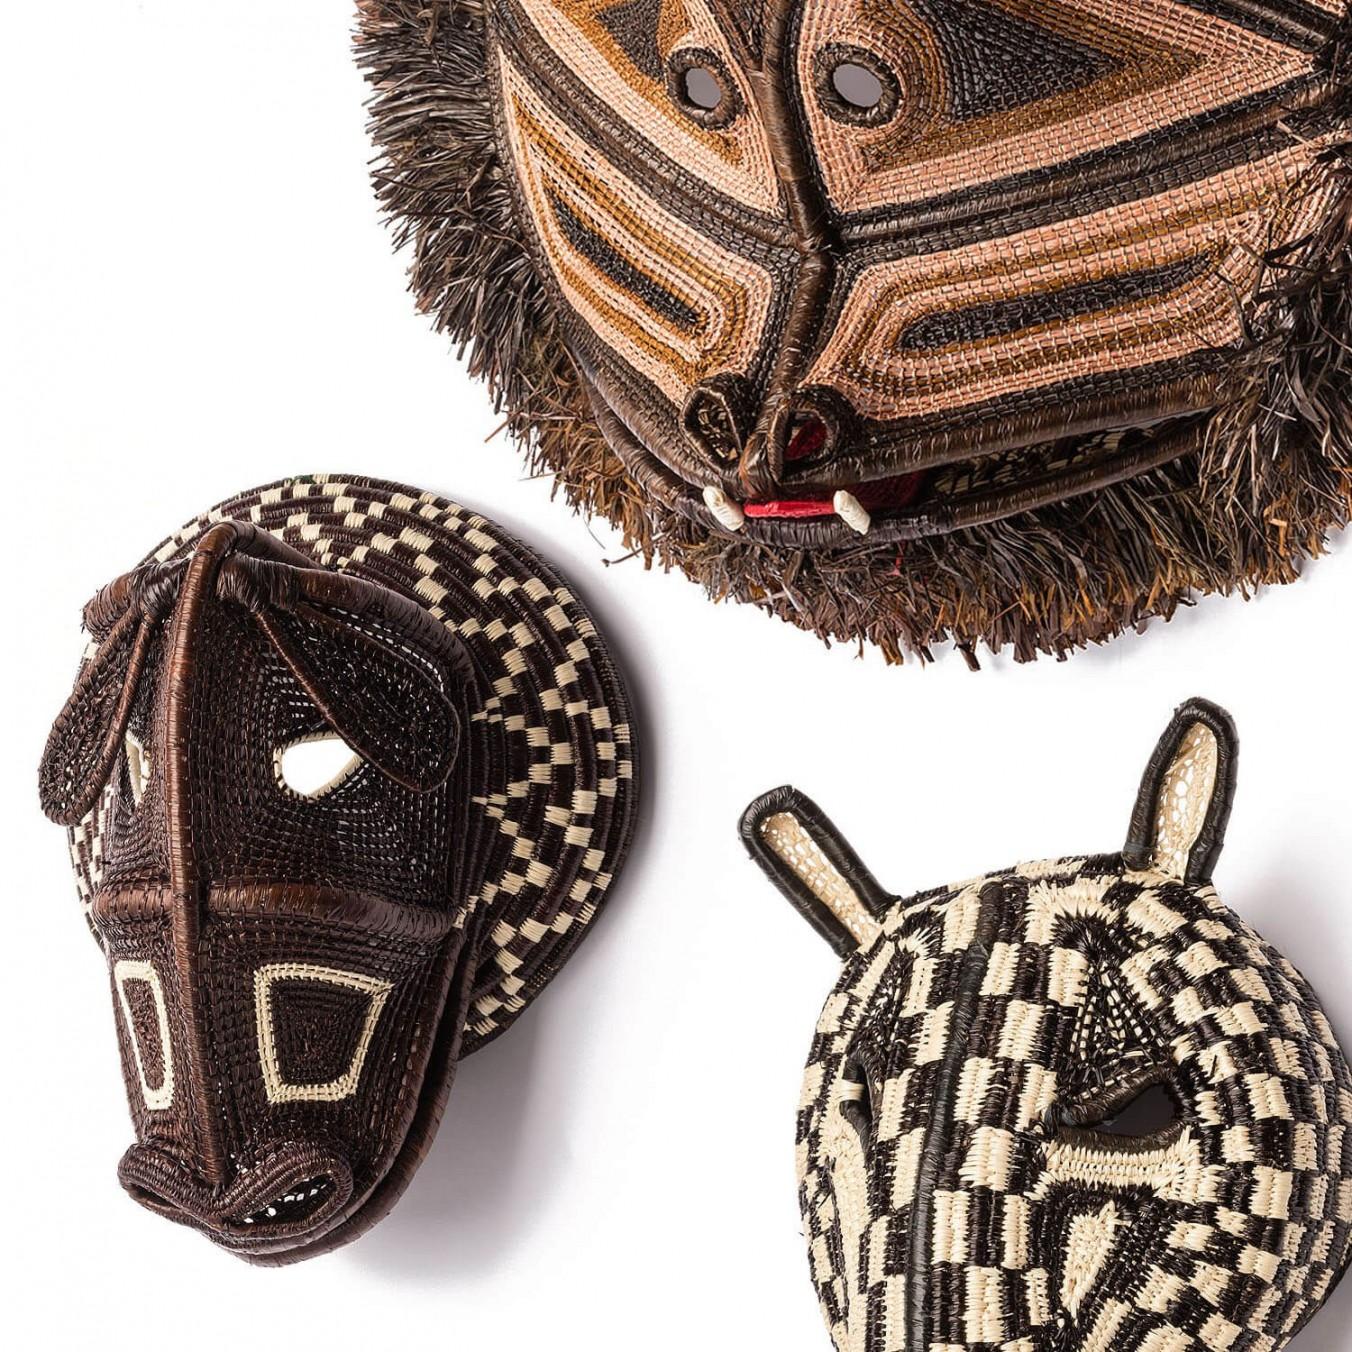 Dekorative handgewebte Maske aus Panama, Nemboro Mono von Ethic&Tropic (Gehstock) im Angebot